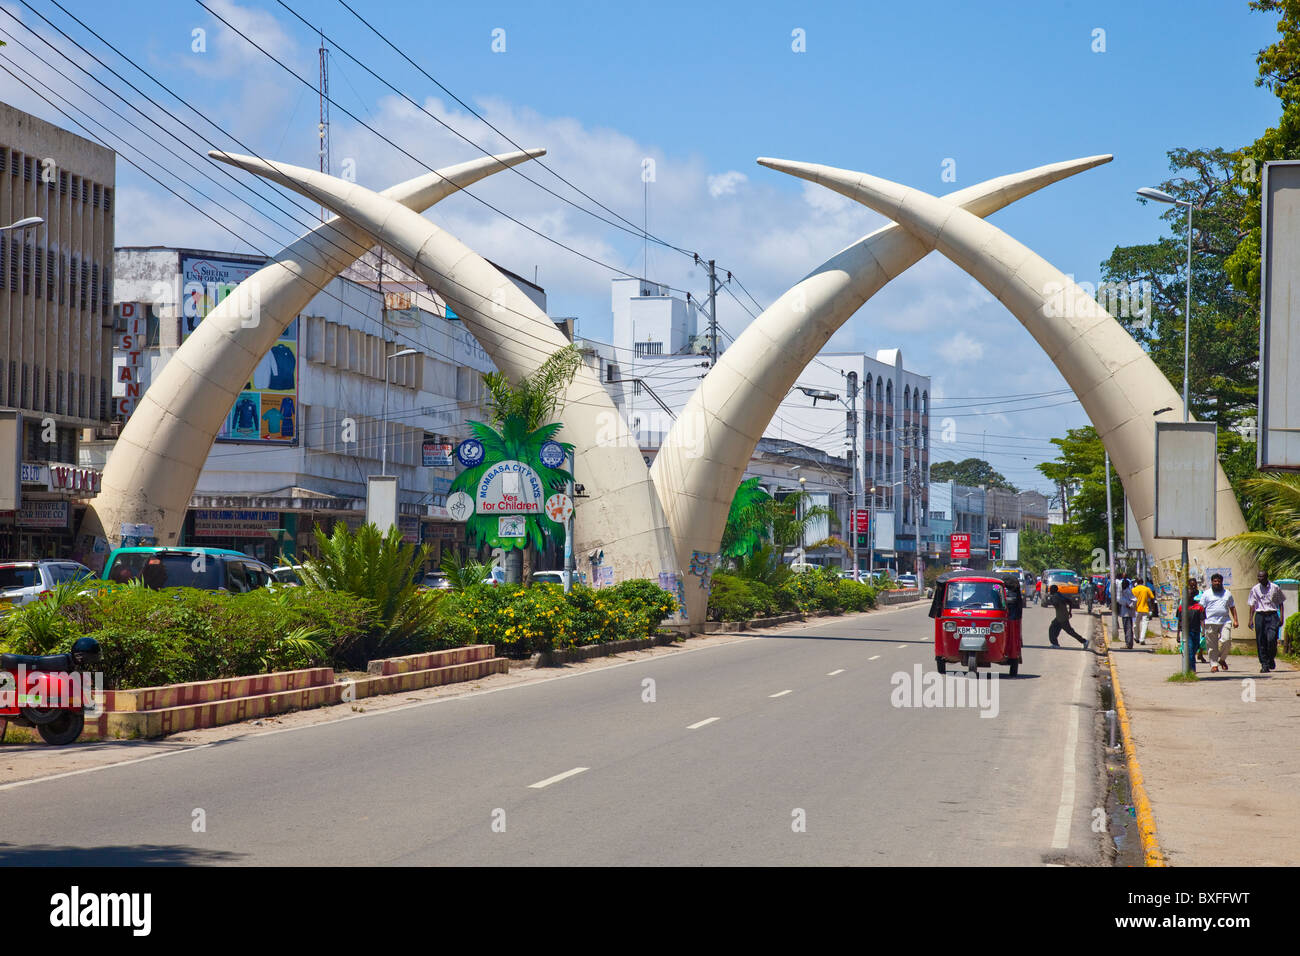 Zanne, Moi Avenue, Mombasa, in Kenya Foto Stock